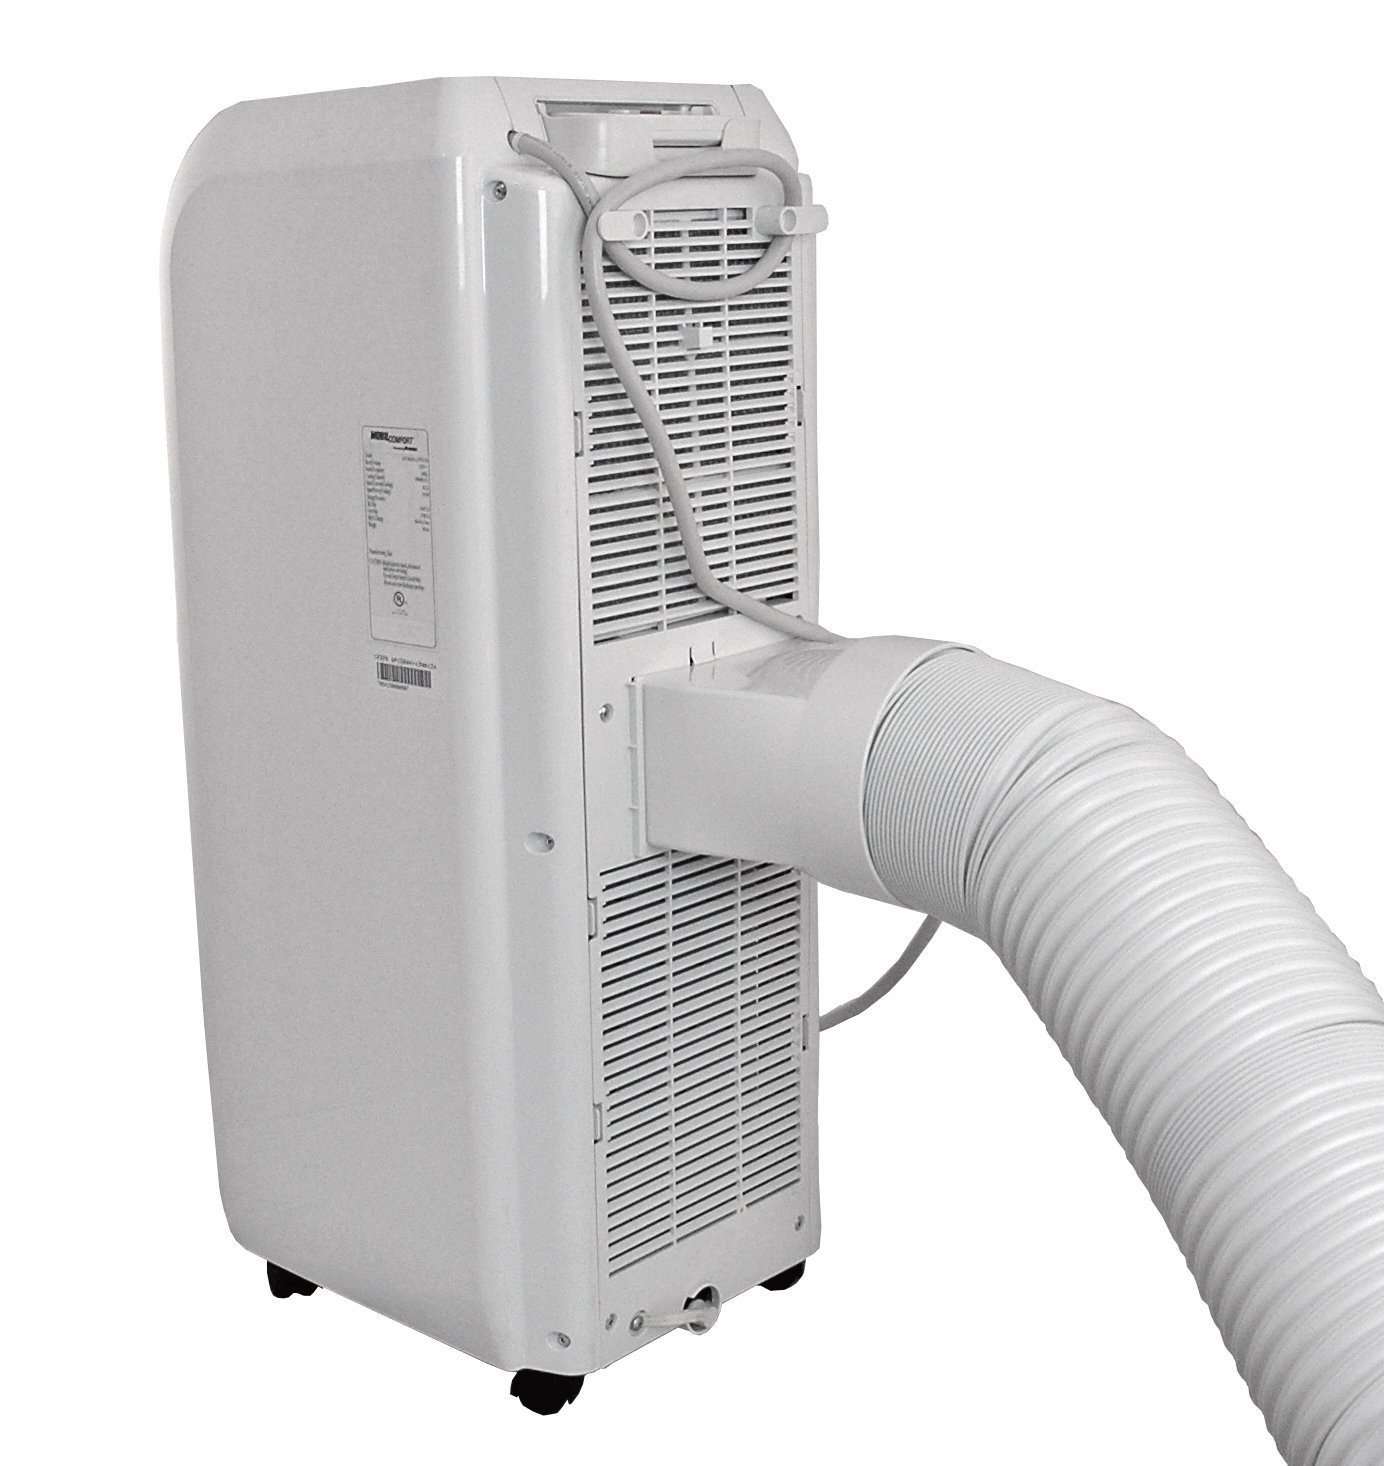 Soleus Air, Soleus Air KY80 KY-8,000 BTU Portable Air Conditioner